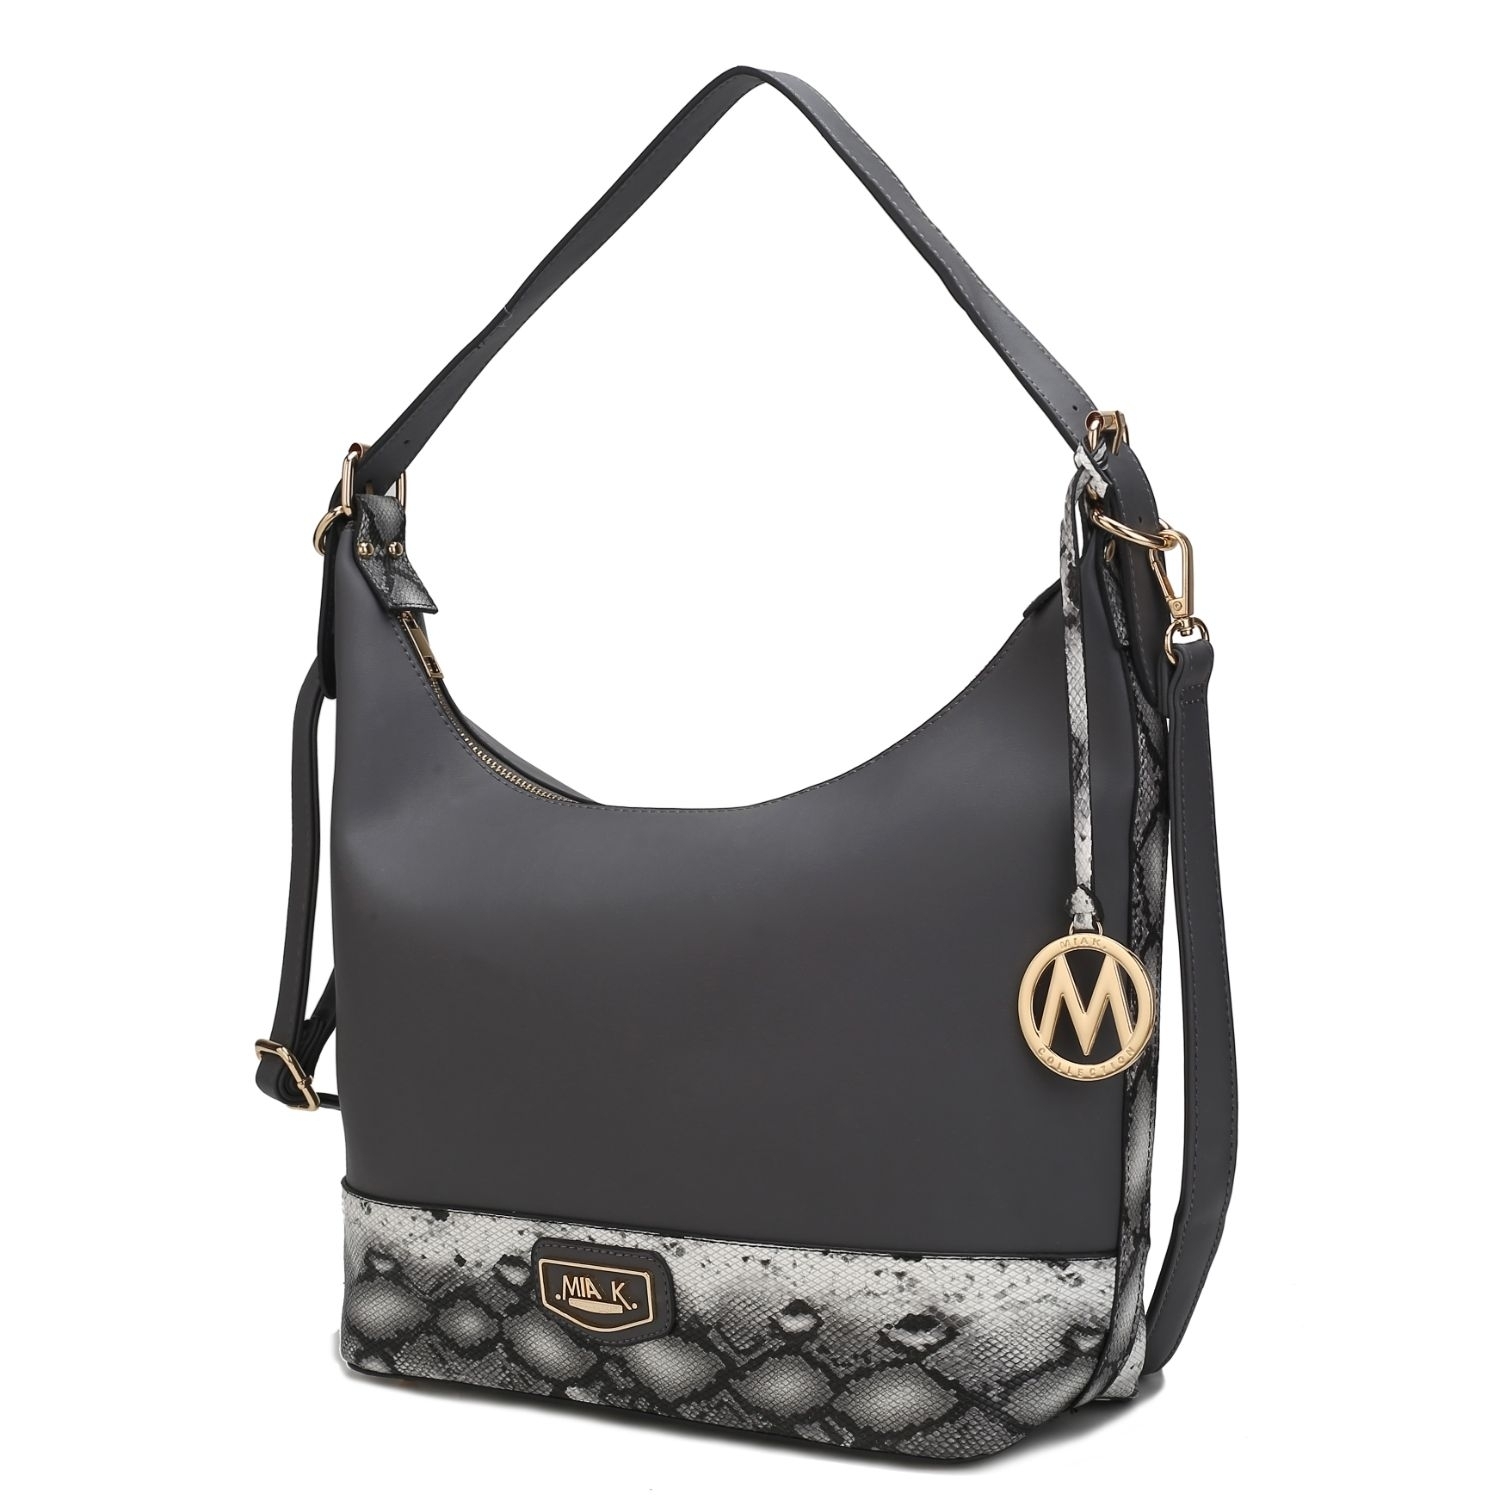 MKF Collection Diana Shoulder Handbag By Mia K. - Charcoal